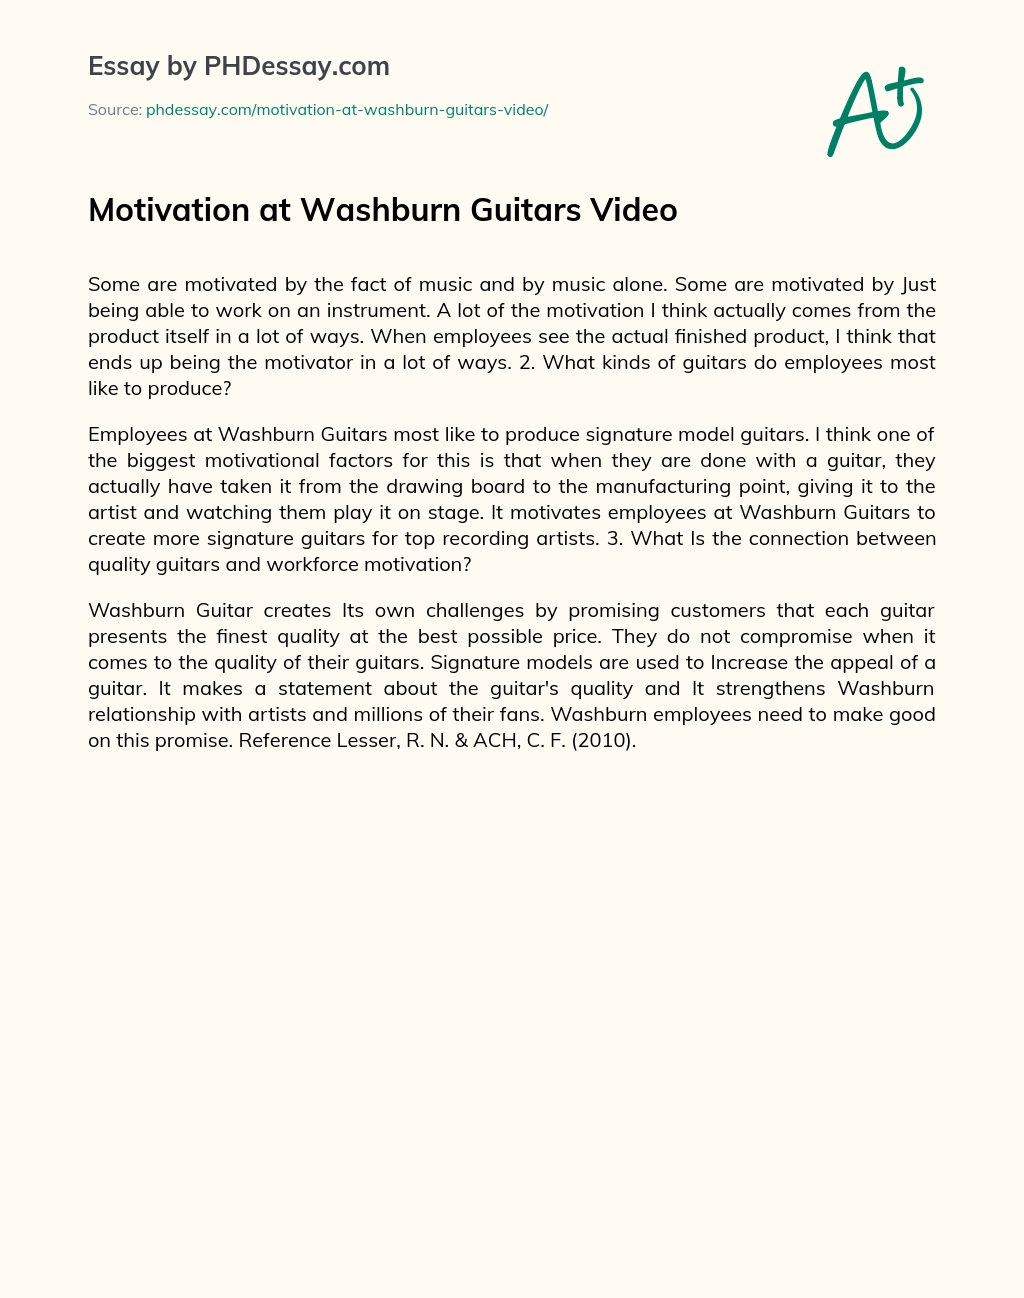 Motivation at Washburn Guitars Video essay